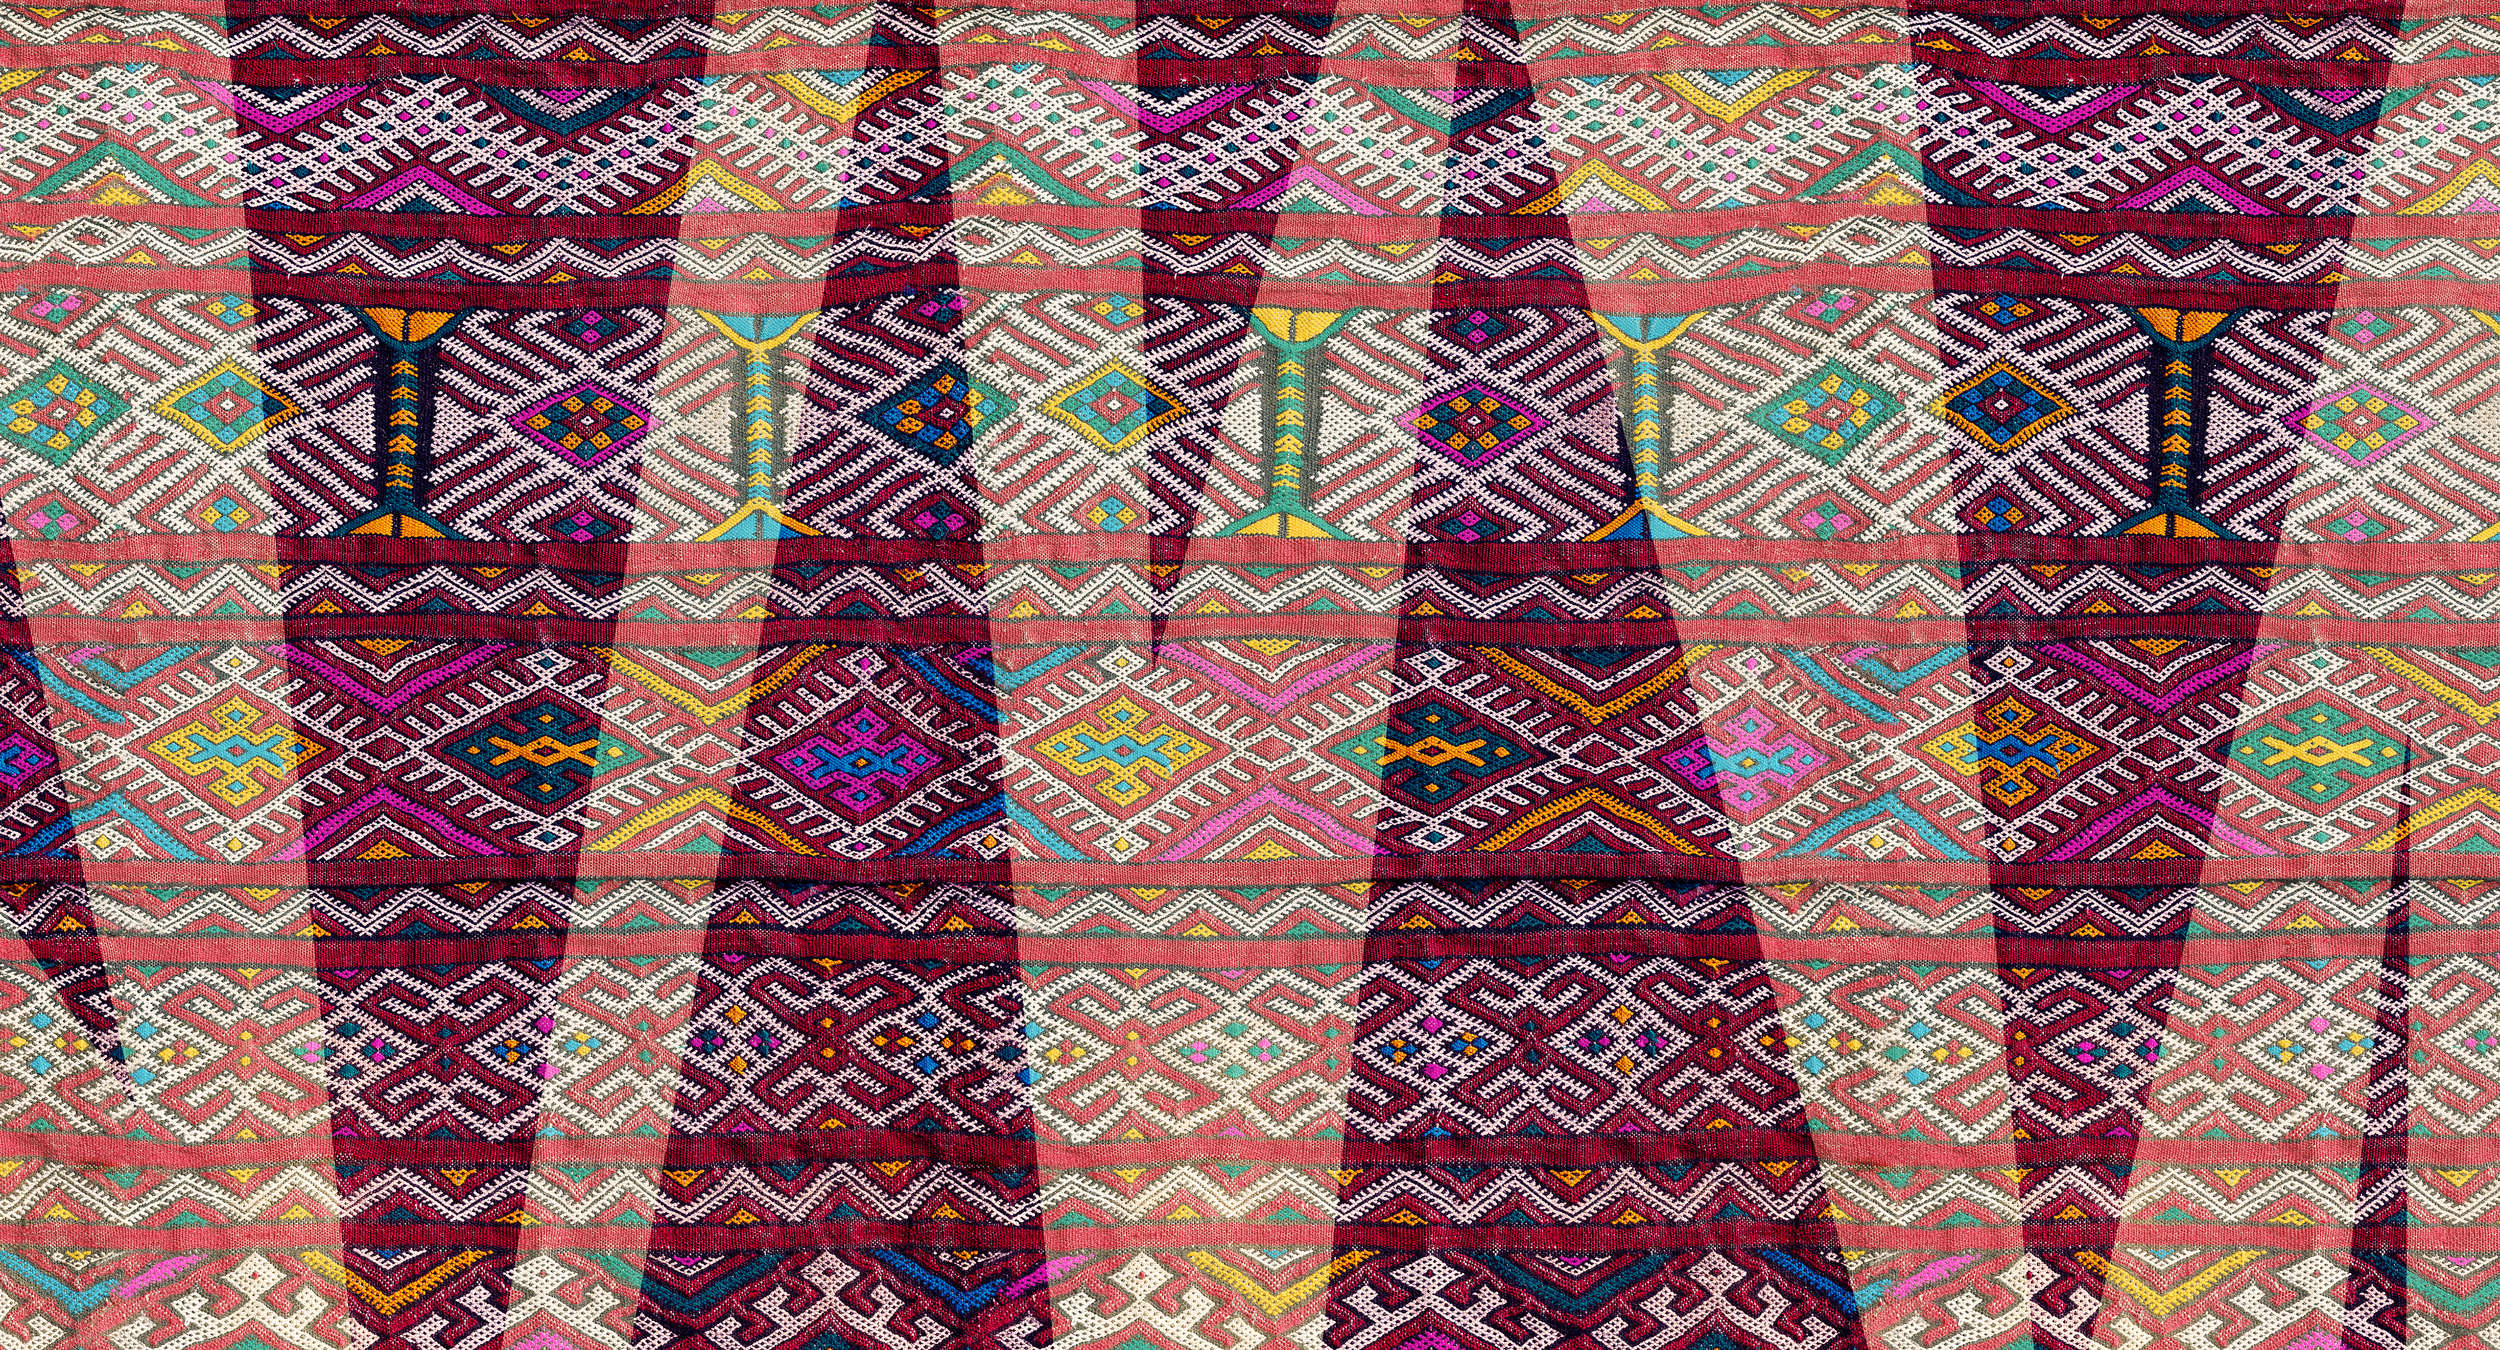             Fototapete Ethno-Stil mit indigenem Webmuster – Violett, Grün, Orange
        